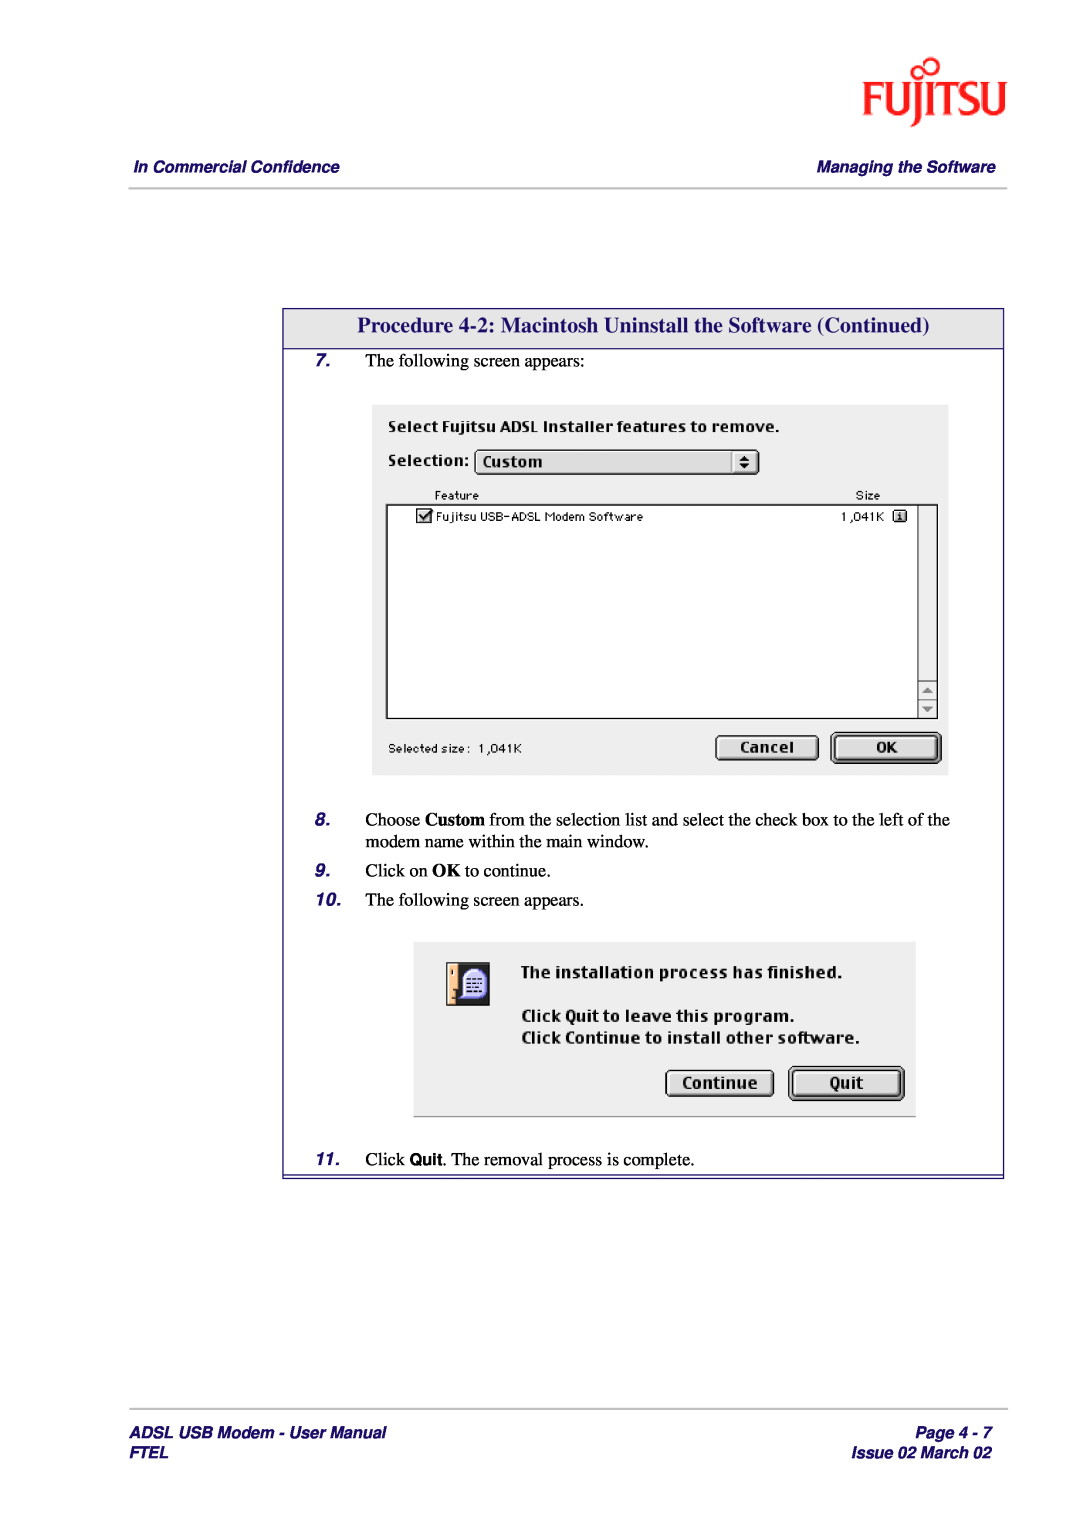 Fujitsu 3XAX-00803AAS user manual Procedure 4-2 Macintosh Uninstall the Software Continued, The following screen appears 